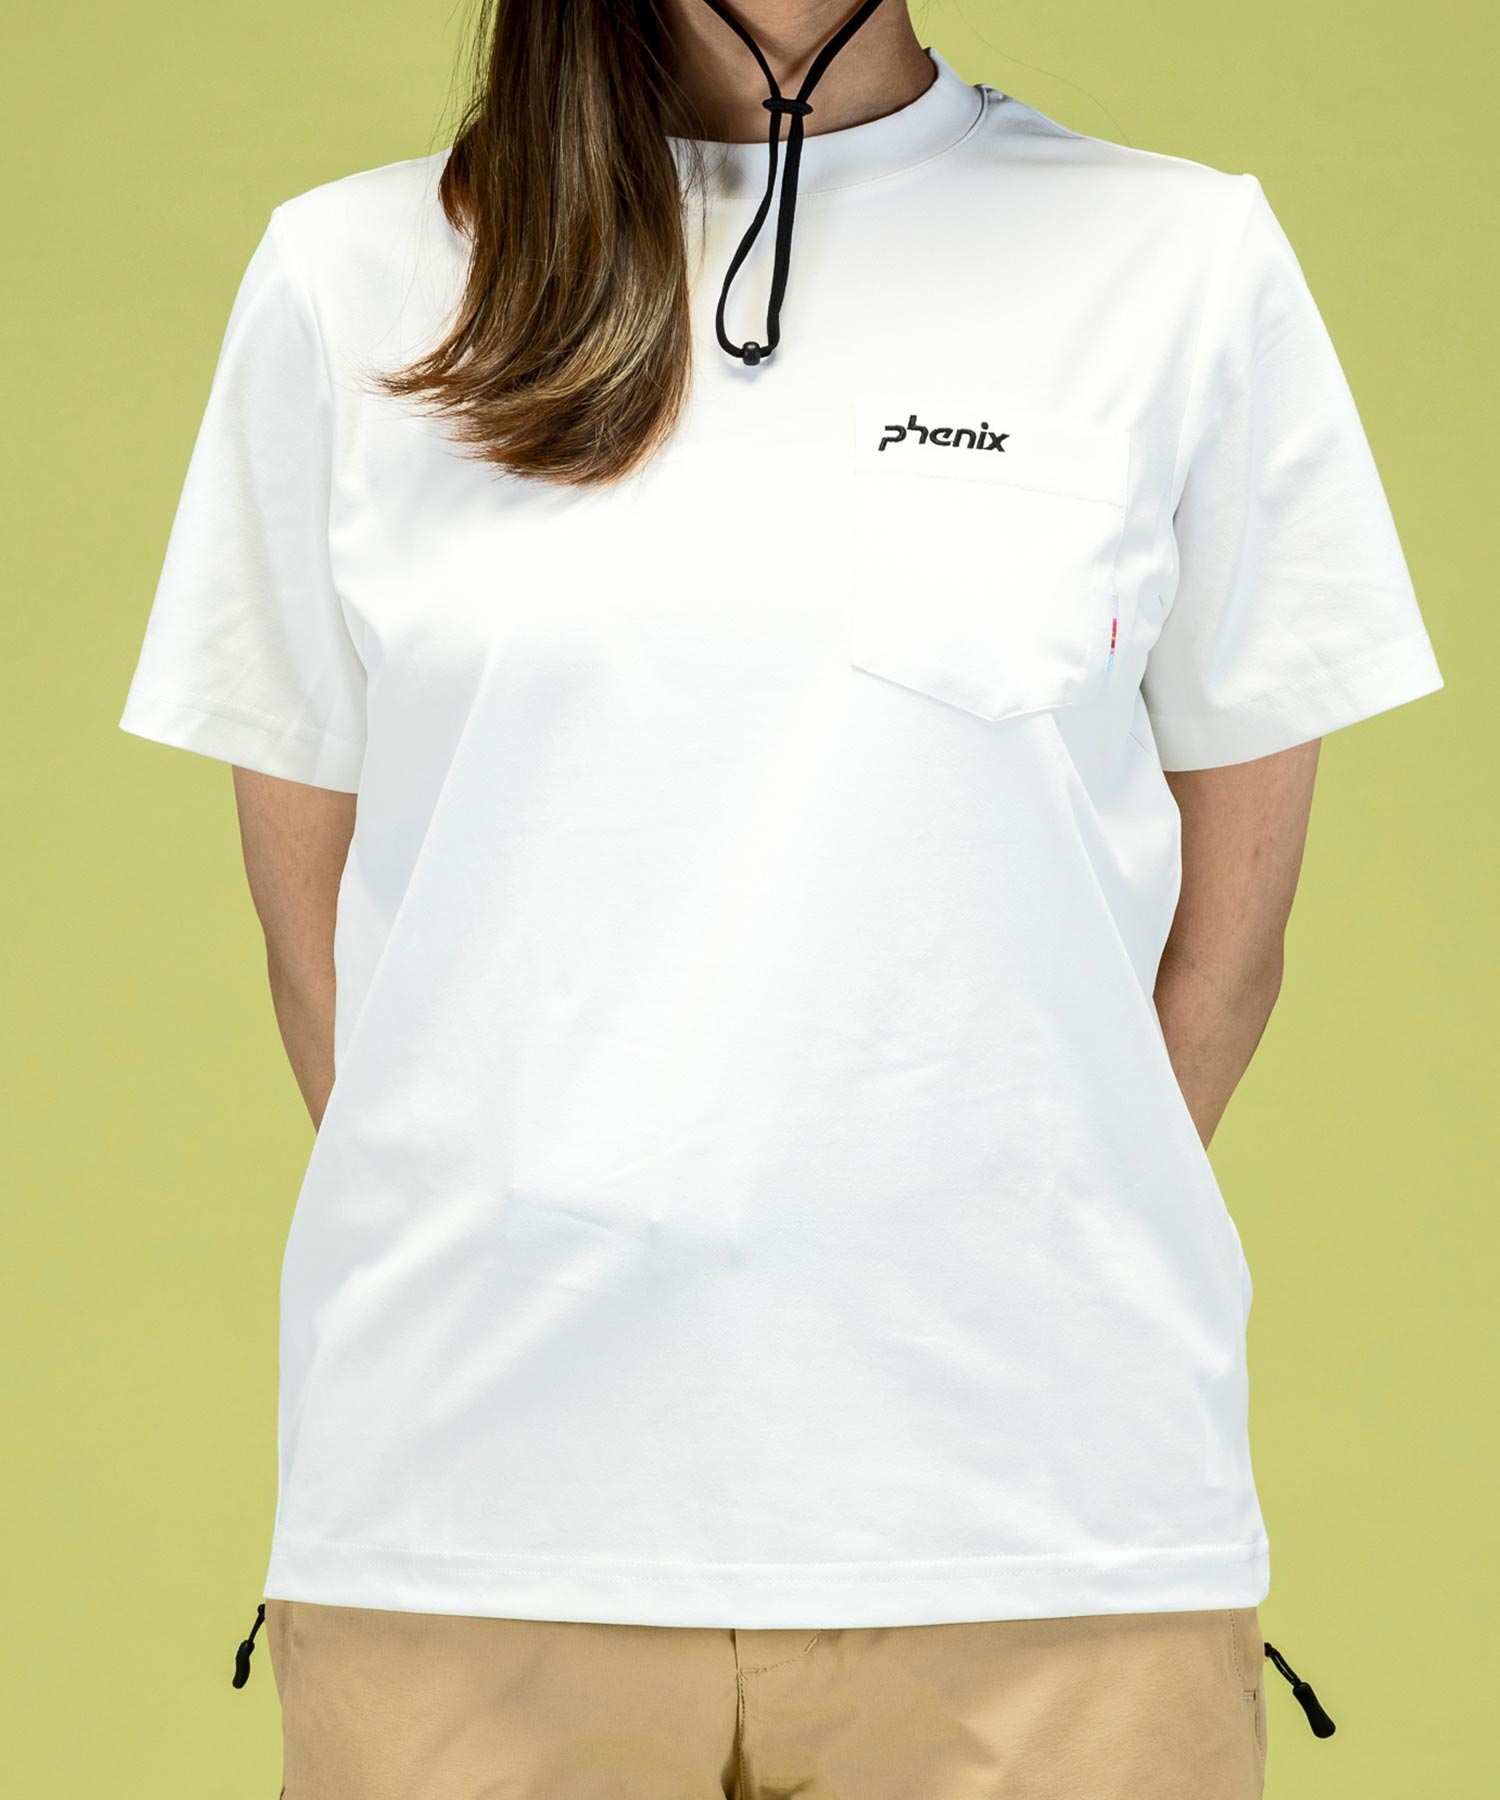 【WOMENS】ポケットT-シャツ レディースTシャツ 速乾 ストレッチ 日焼け防止 快適 防臭 抗菌 ティーシャツ インナー ミドルウェア/phenix outdoor(フェニックスアウトドア)